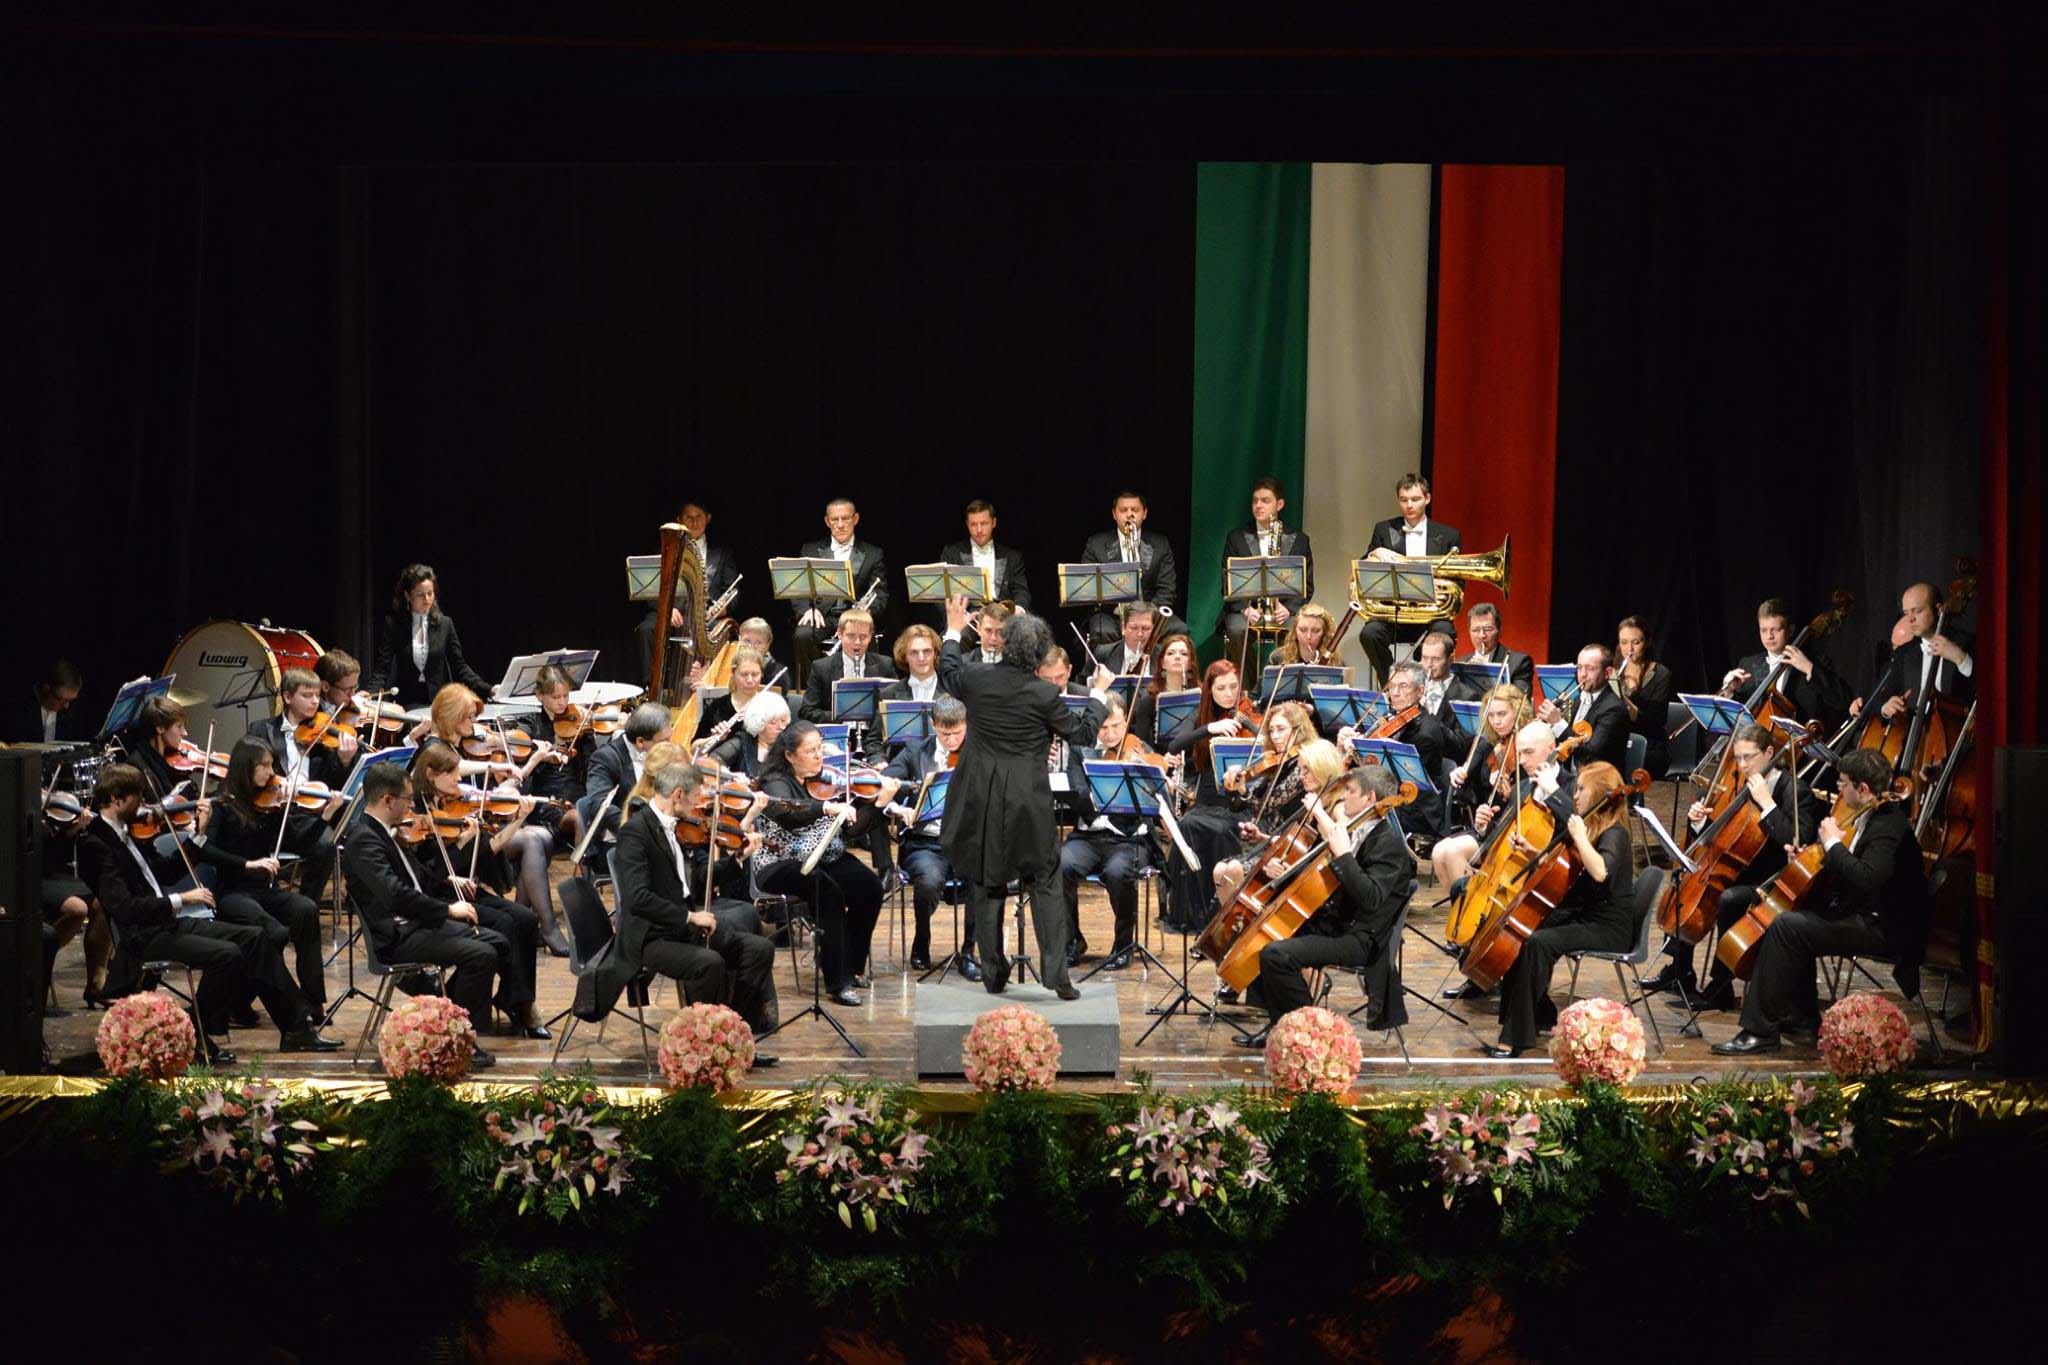 Concerto di Capodanno, The Grand New Year 2017 Concert, Concierto de Fin de Año, Grosse Silvesterkonzert, Le Grand Concert du Nouvel An 2017 au Théâtre Académie de Conegliano